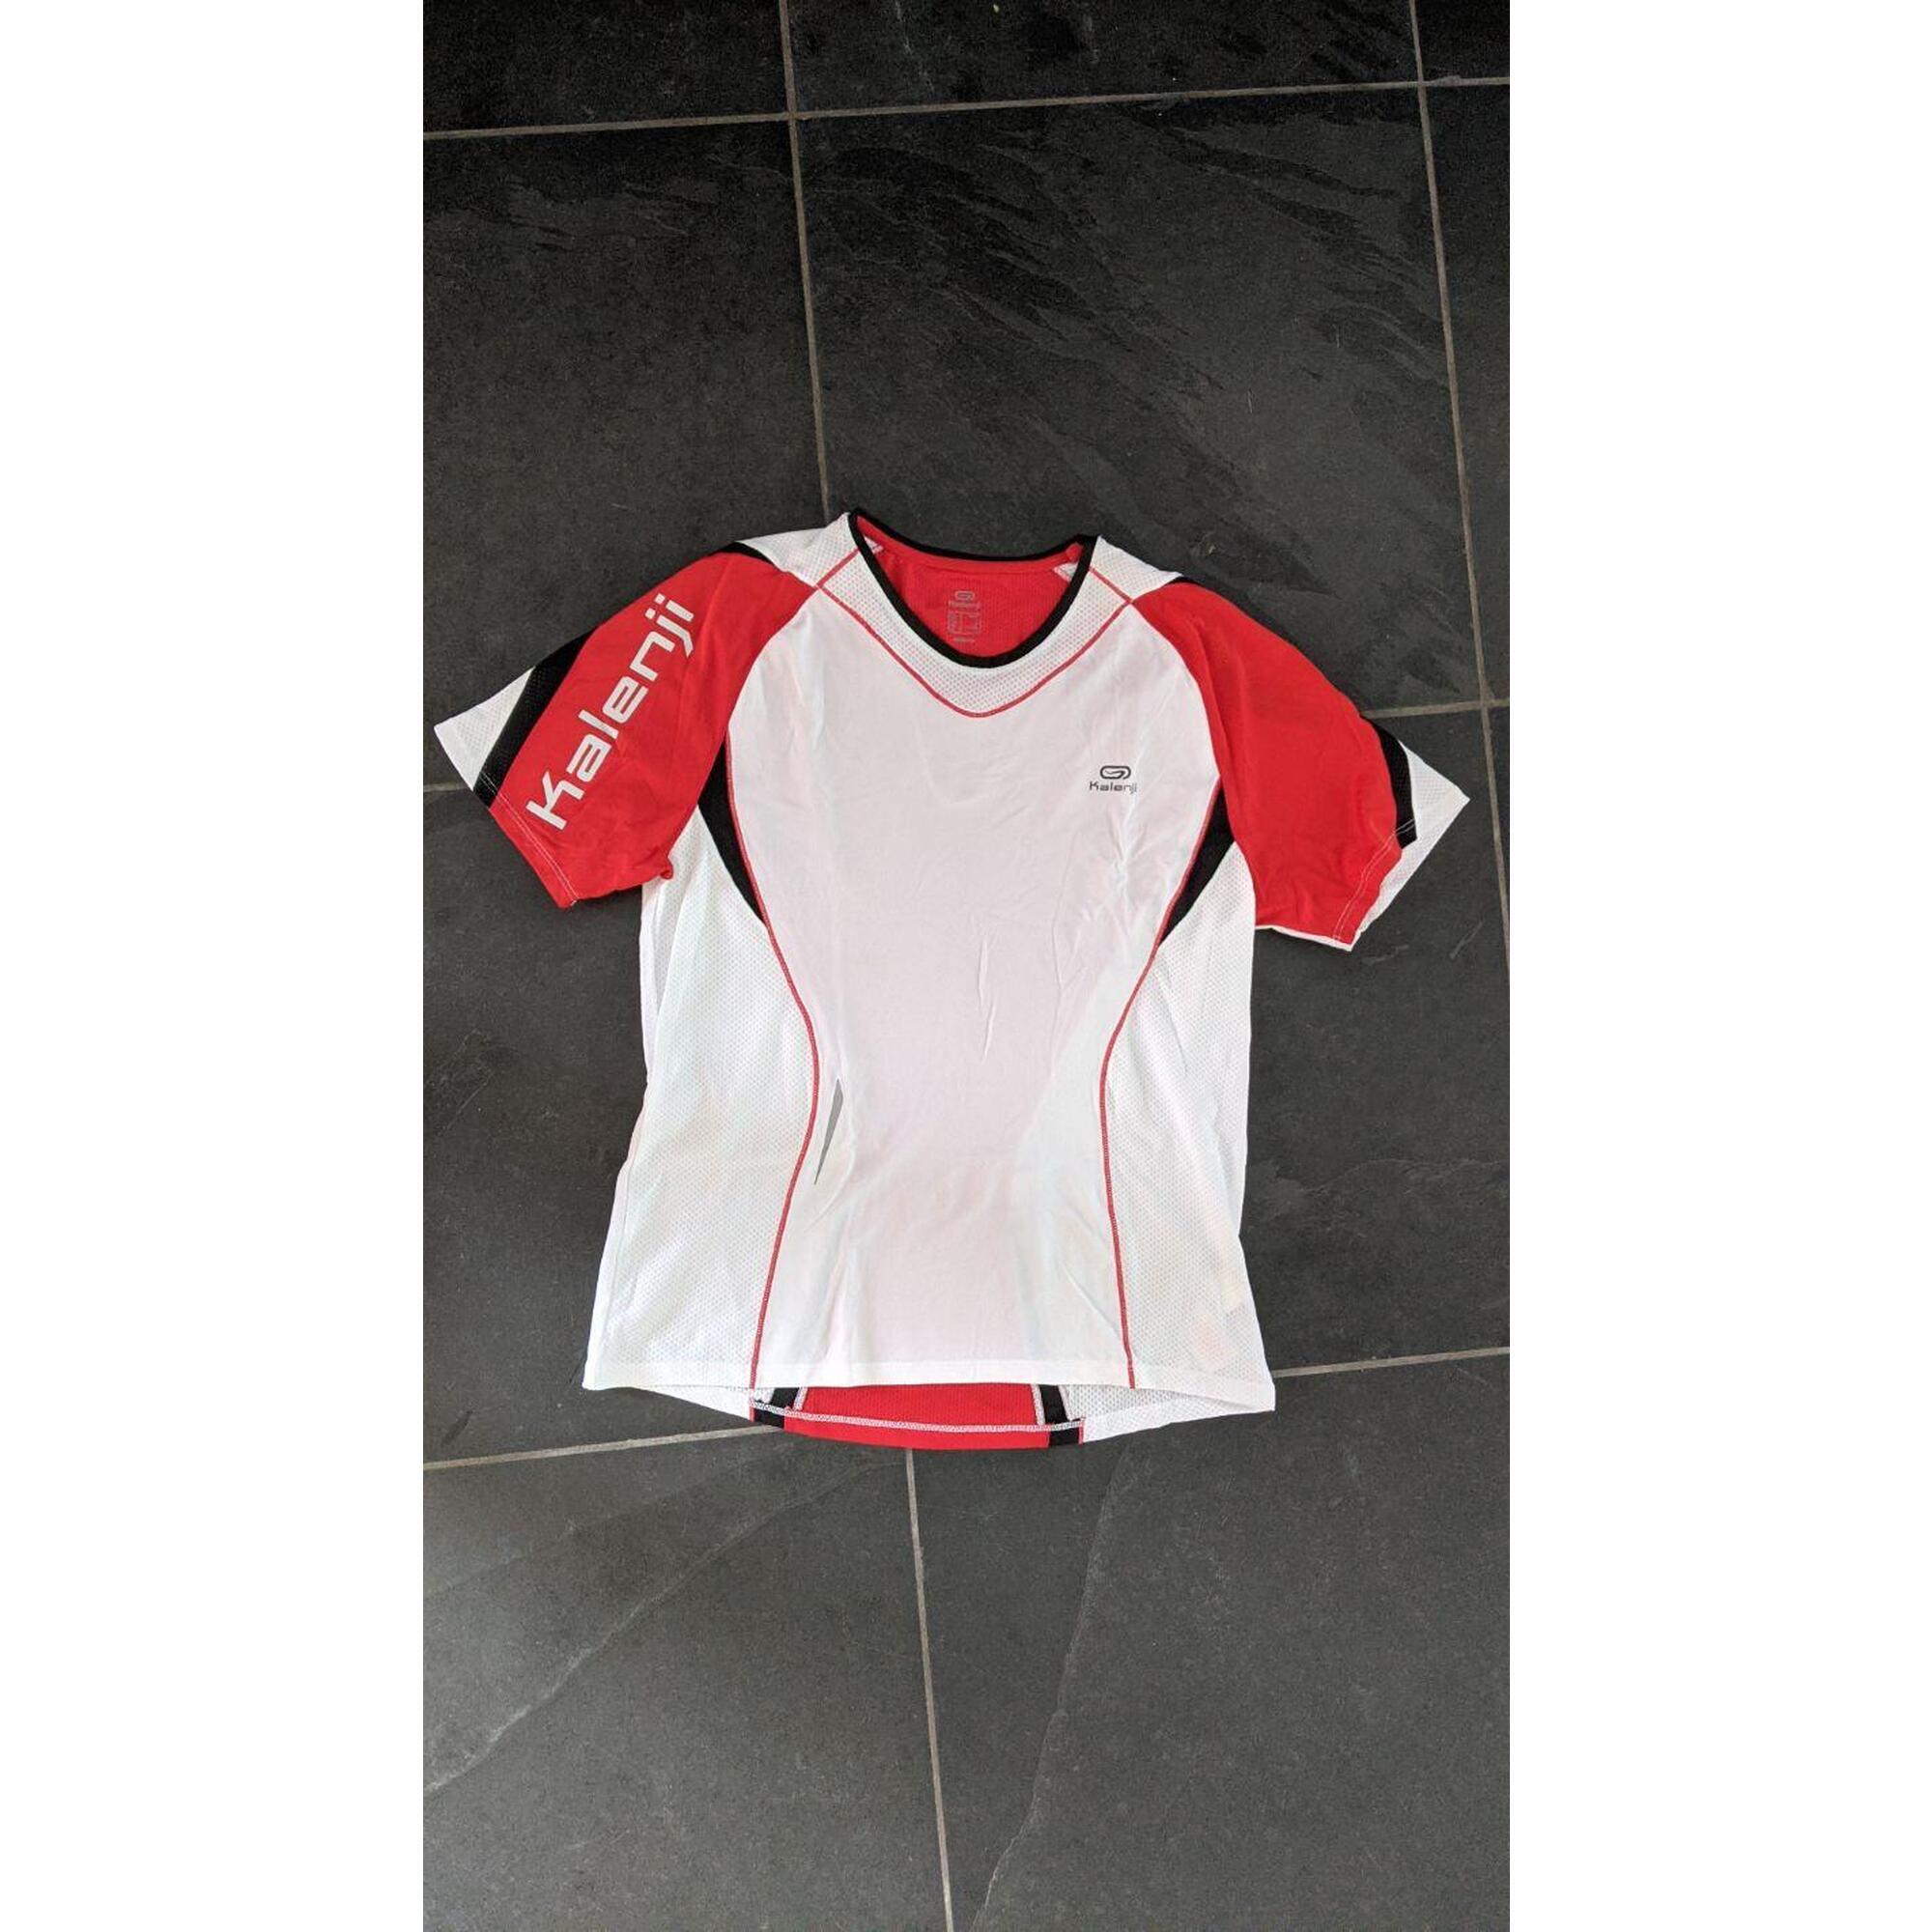 C2C - Kalenji hardloop t-shirt performance light rood-wit - Taille L